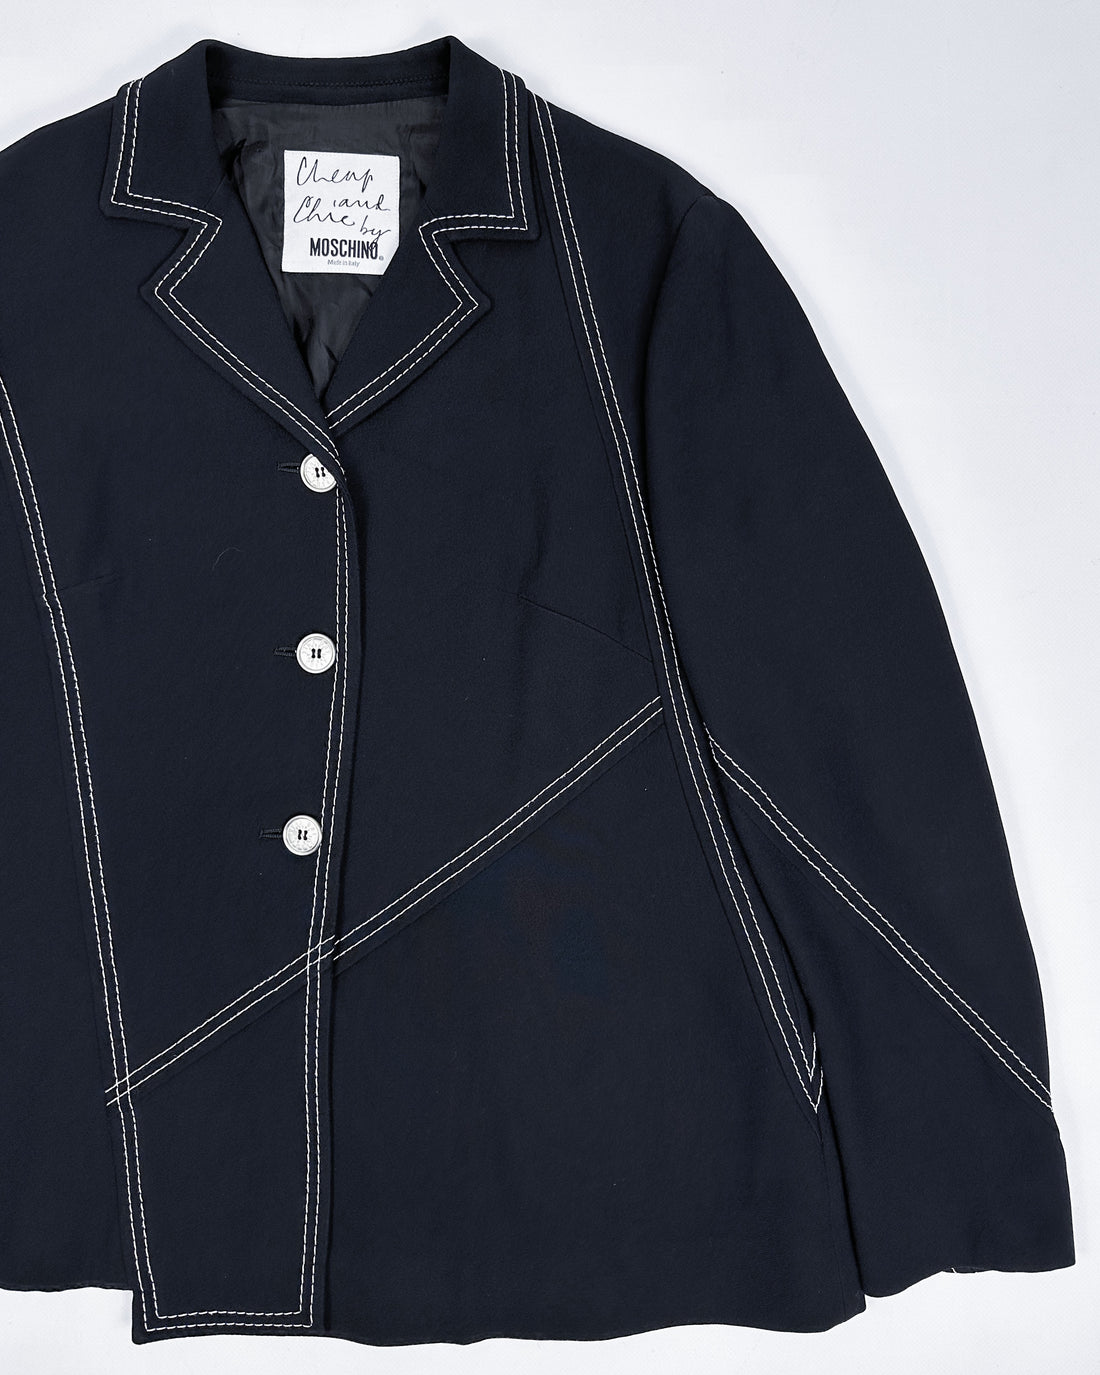 Moschino Black Stitched 3-Button Jacket 1990's